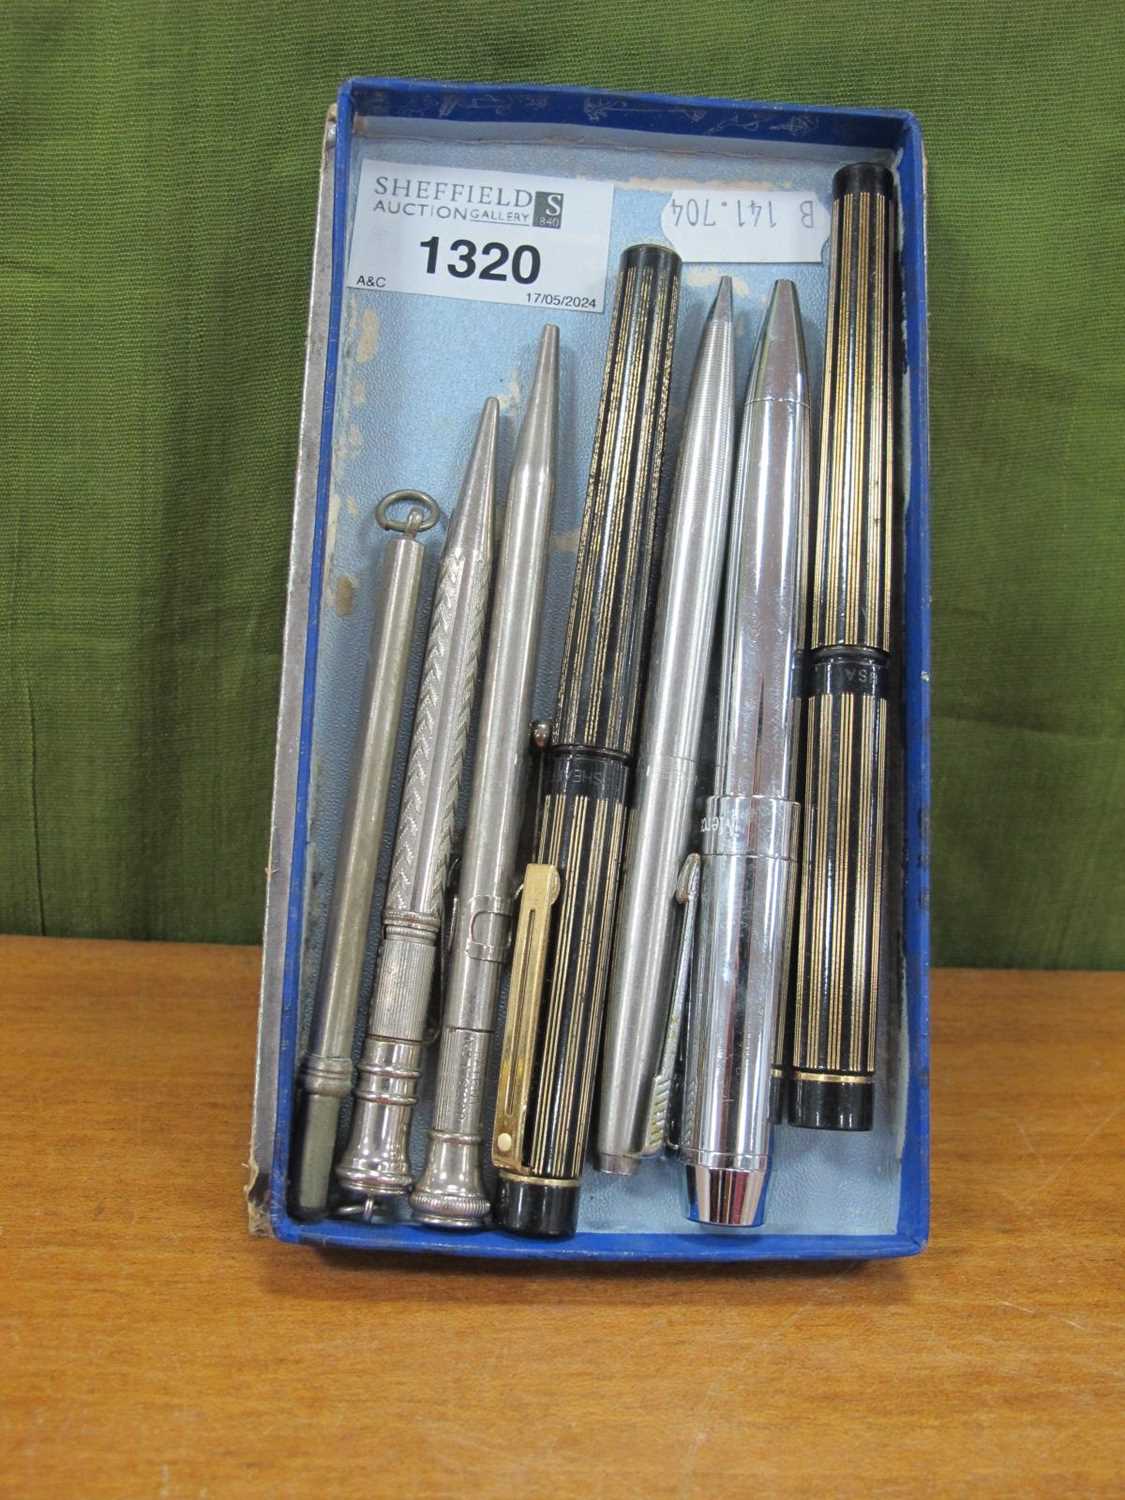 Sheaffer Ink Pens, with 14K nibs, three pencils, scissors, Mercedes pen.